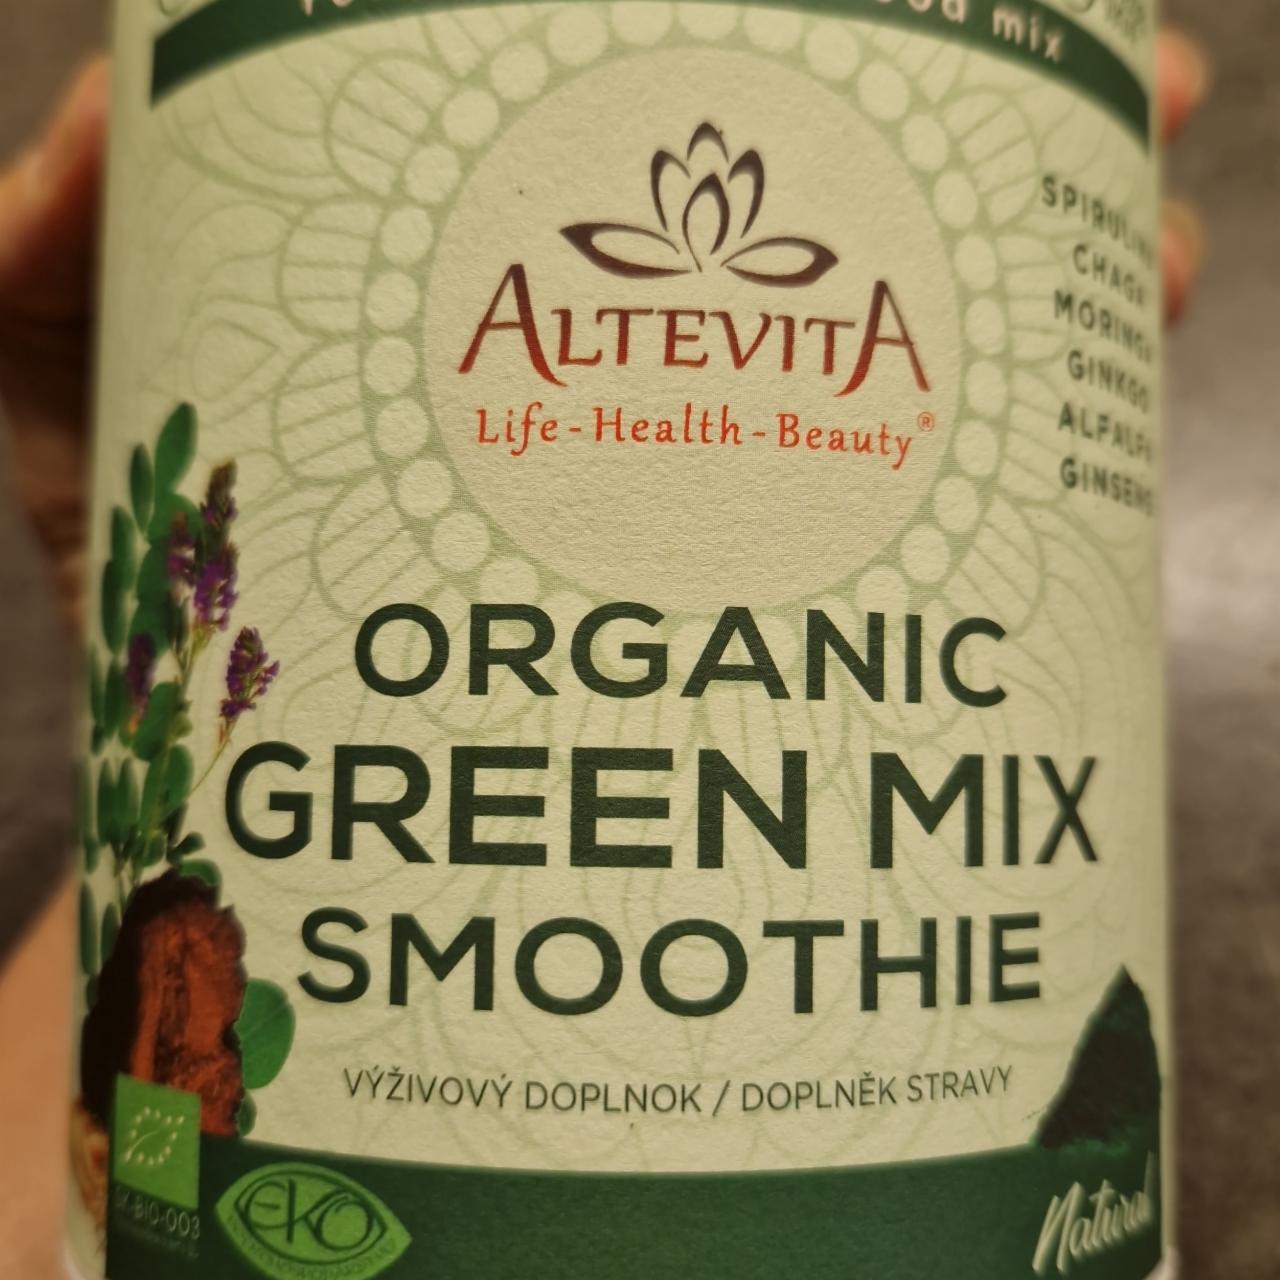 Fotografie - Organic green mix smoothie Altevita